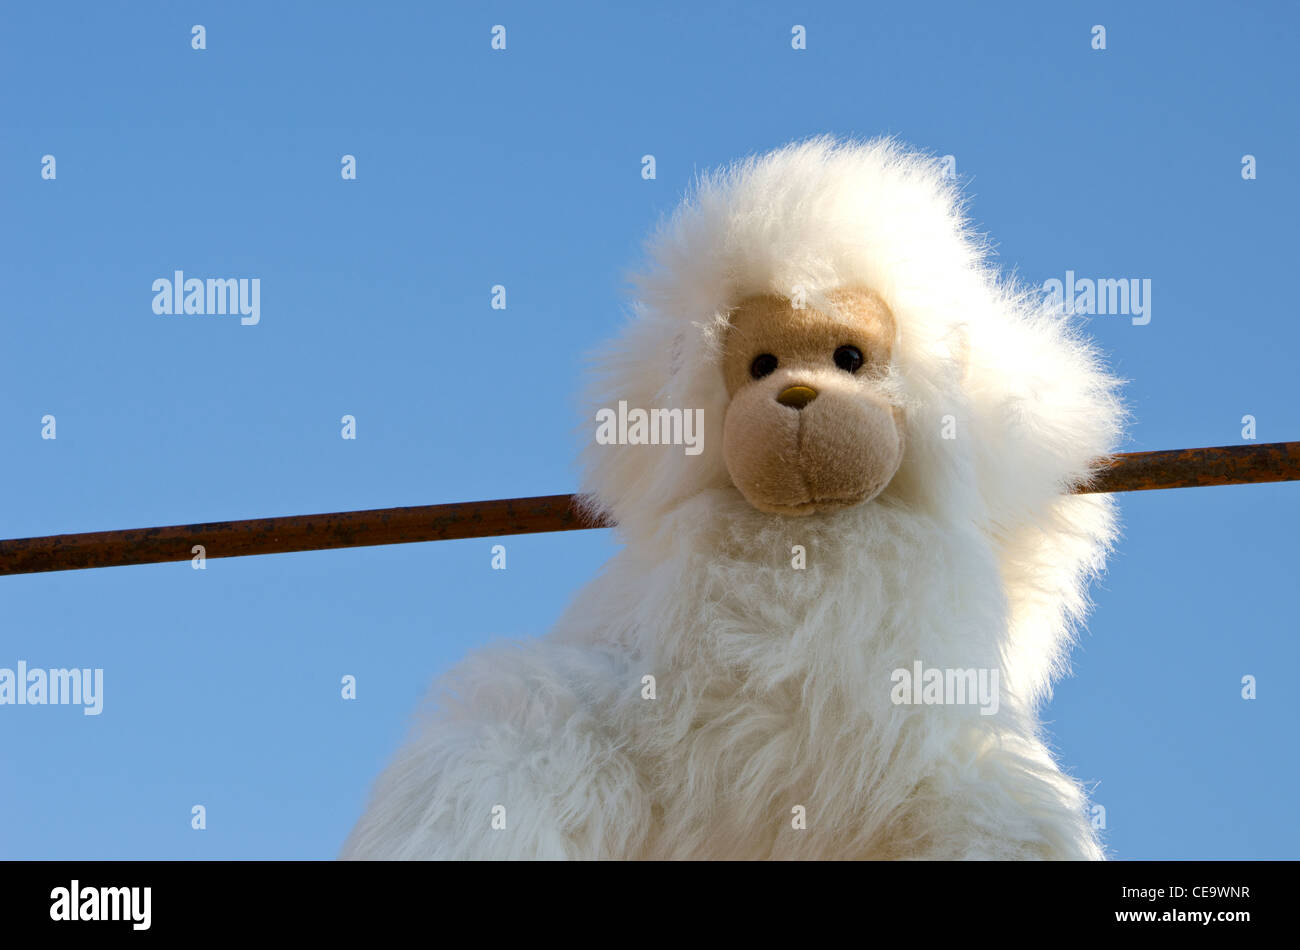 Bushy white plush monkey doll on background of blue sky Stock Photo